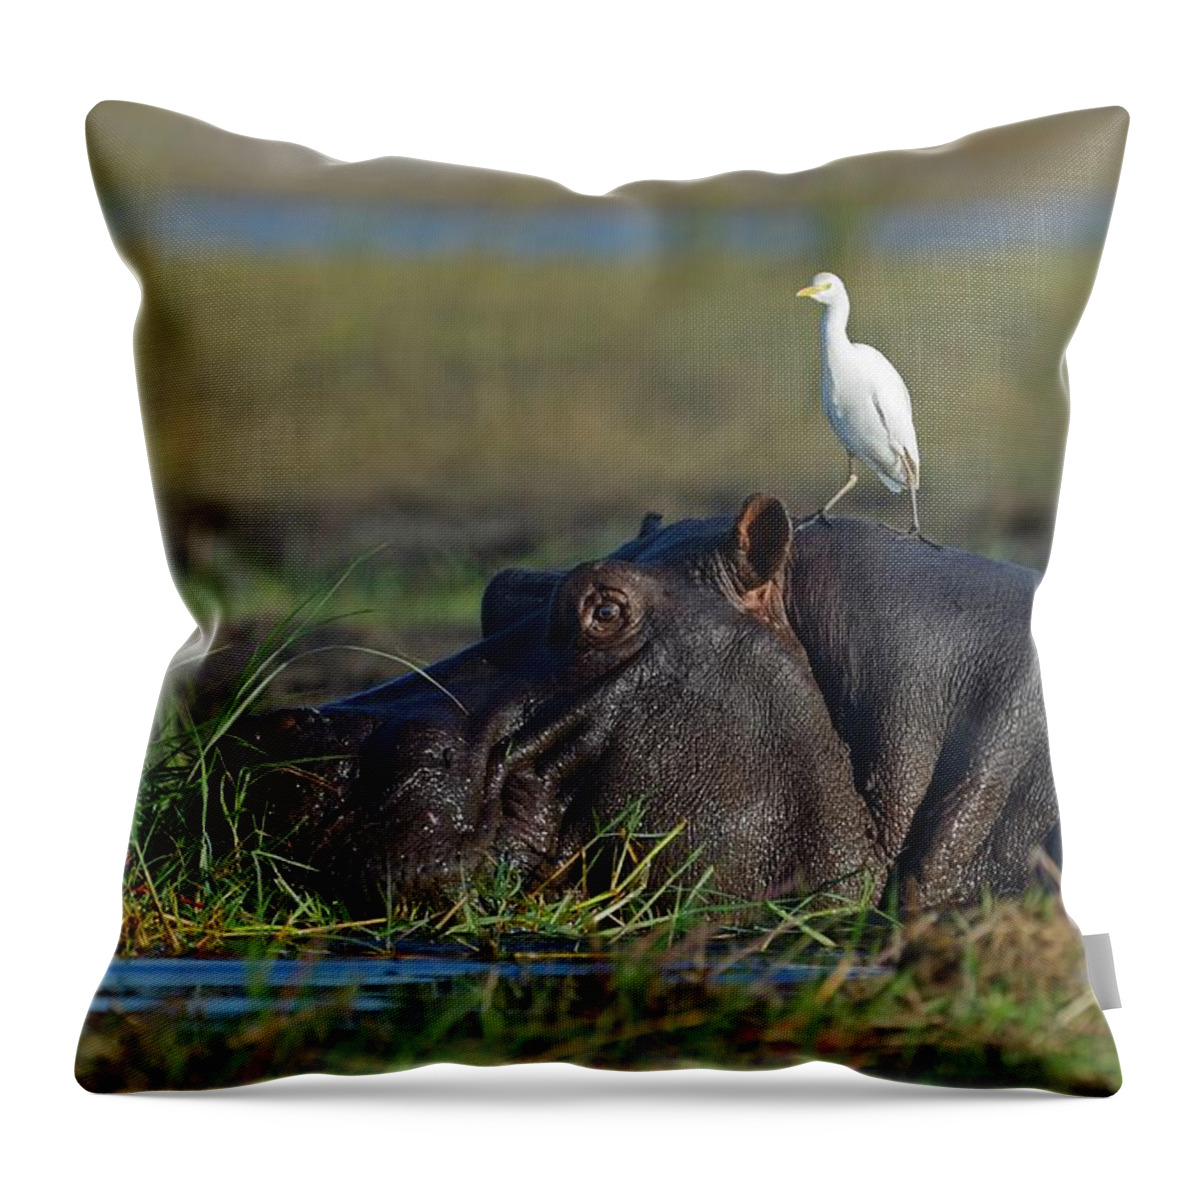 Botswana Throw Pillow featuring the photograph Wildlife Of Chobe Natiobal Park #2 by Winfried Wisniewski